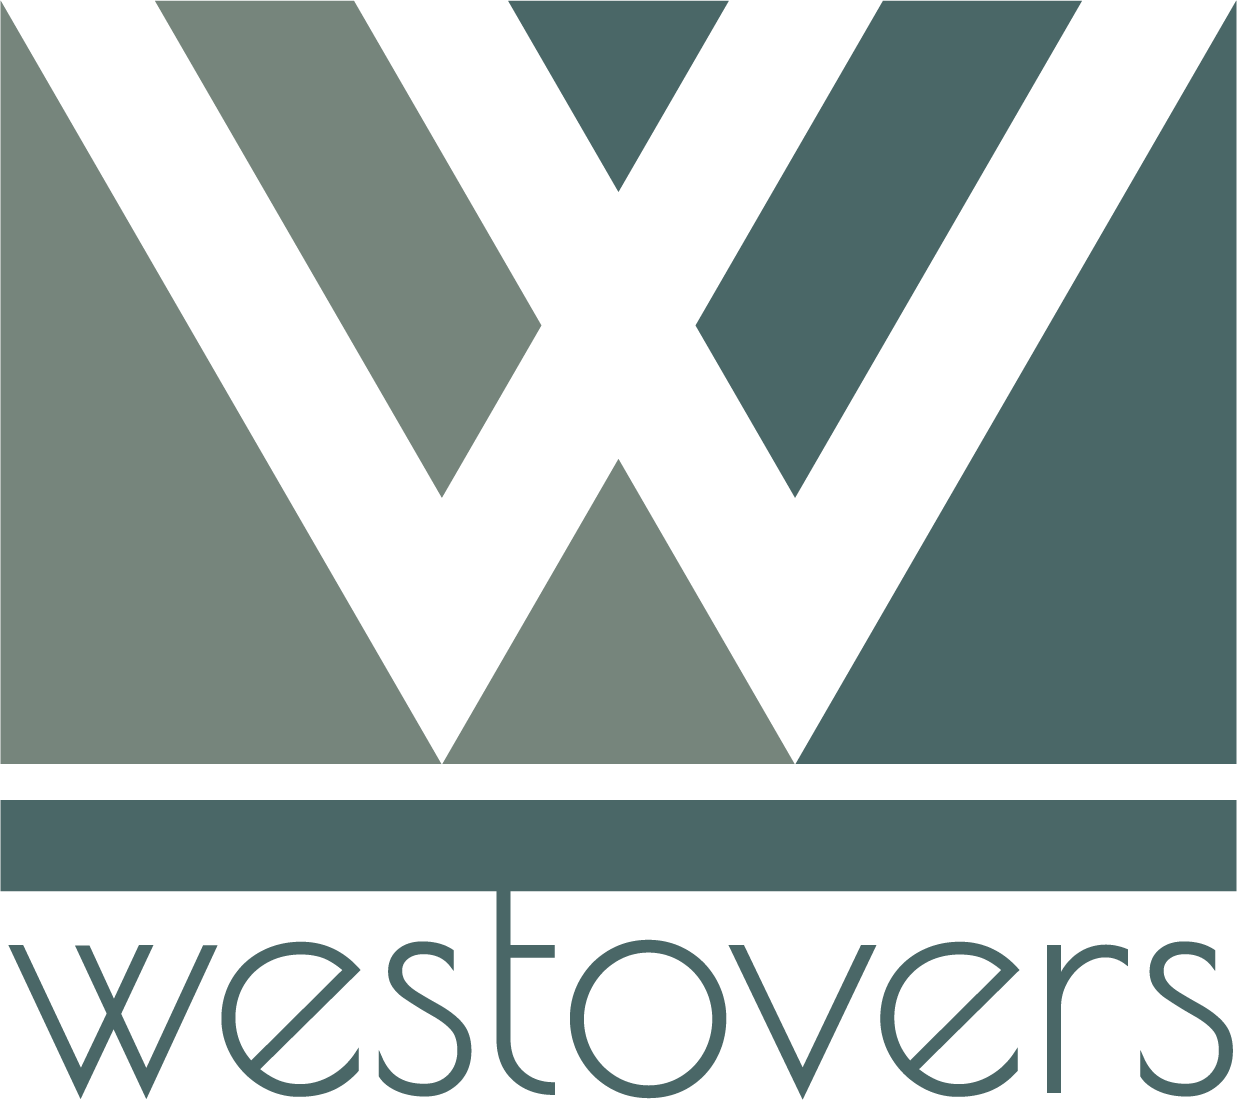 Westover Services's logo